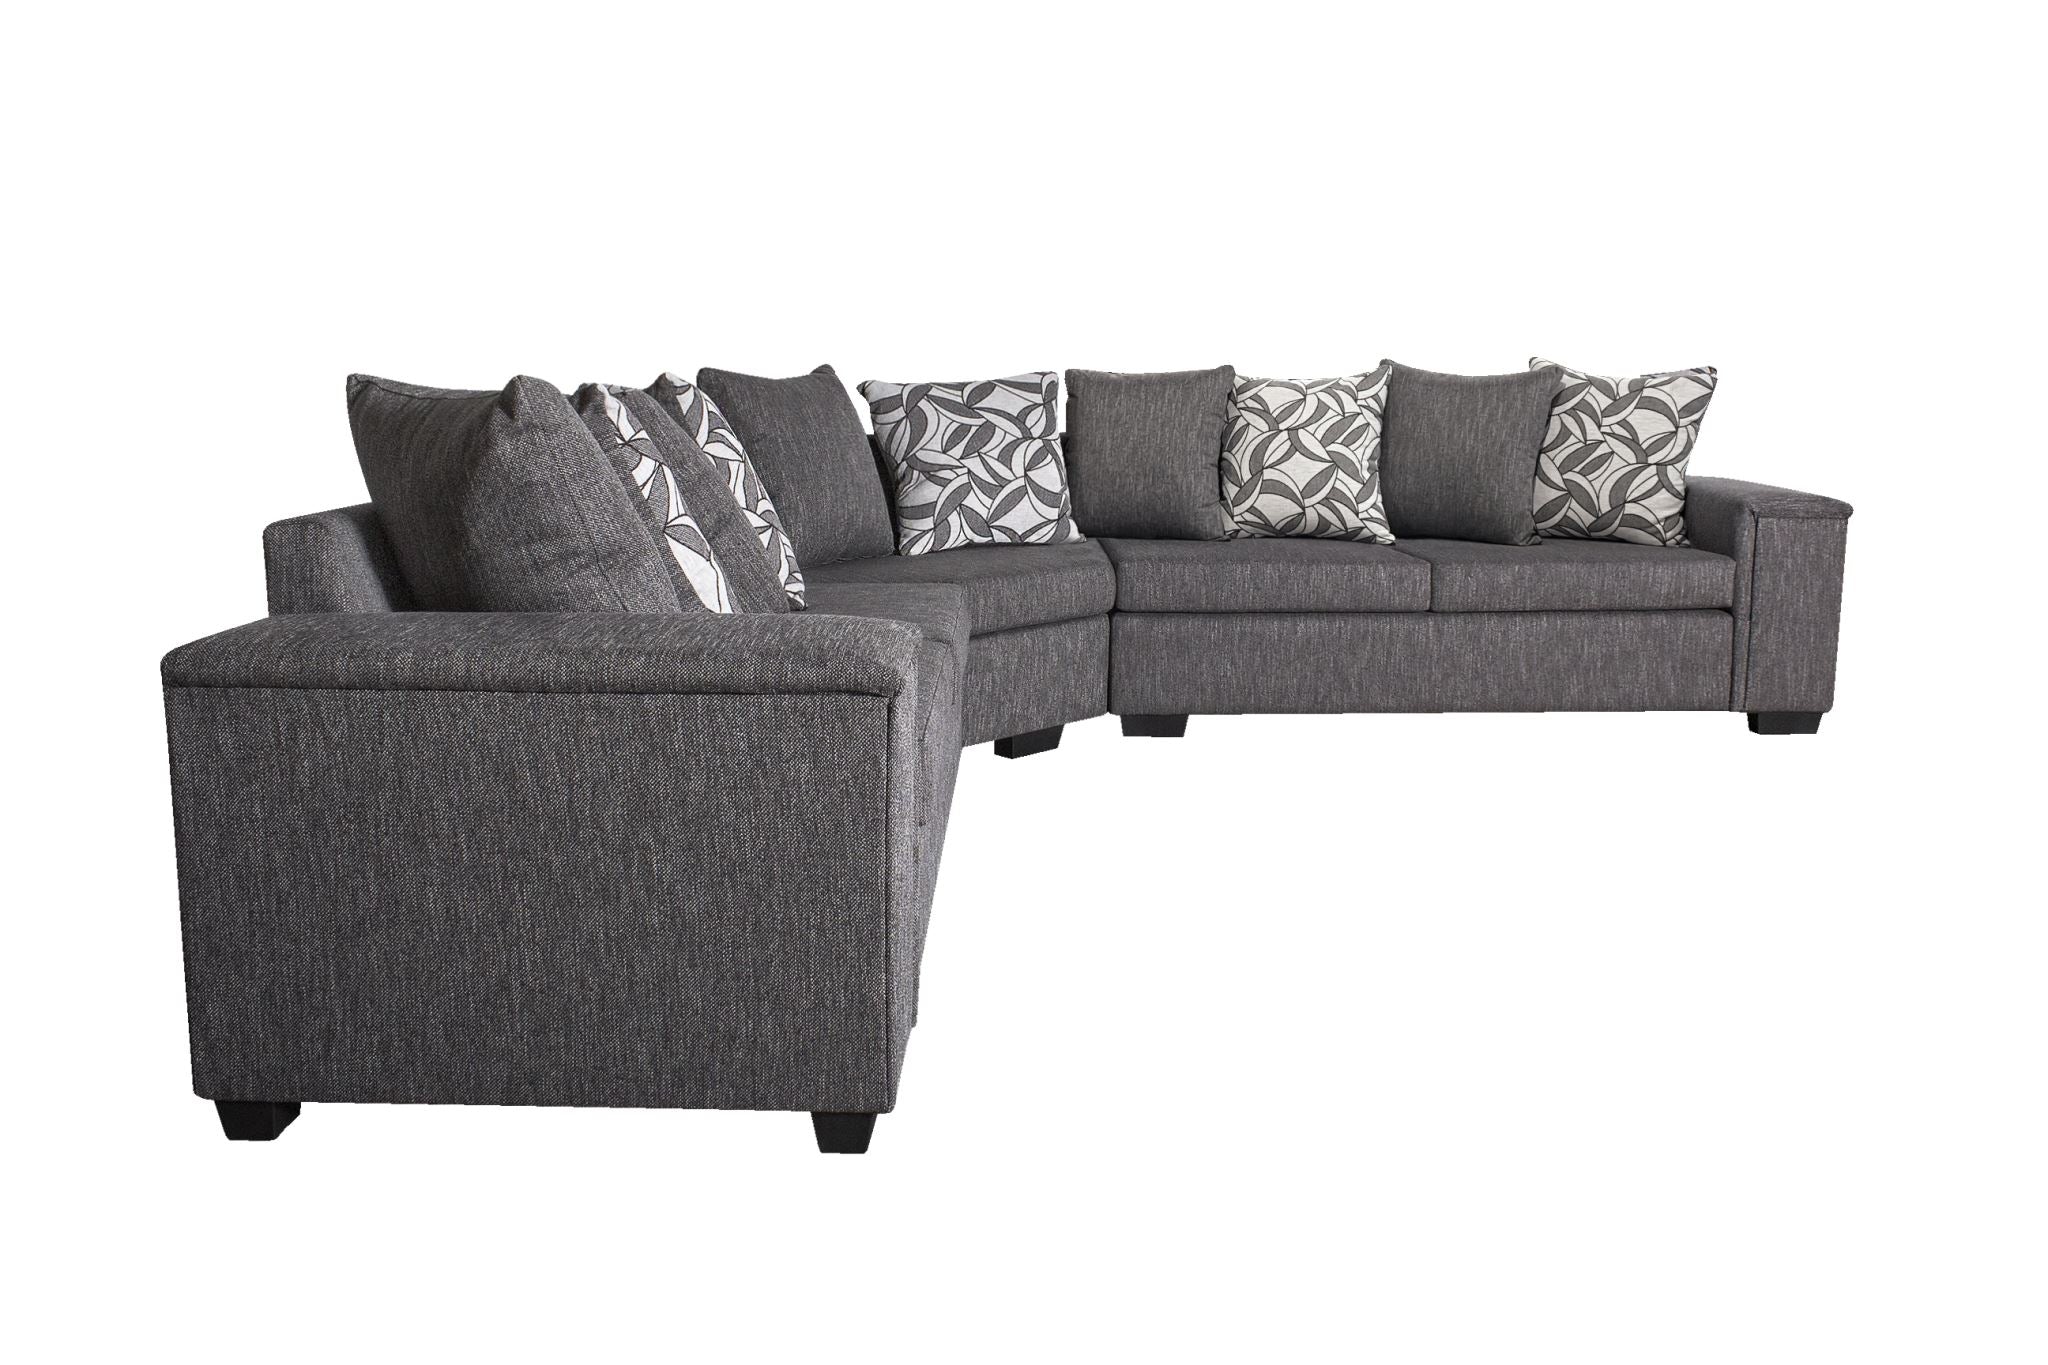 DS NZ made Ella corner sofa kido black with pattern cushions (Michigan)